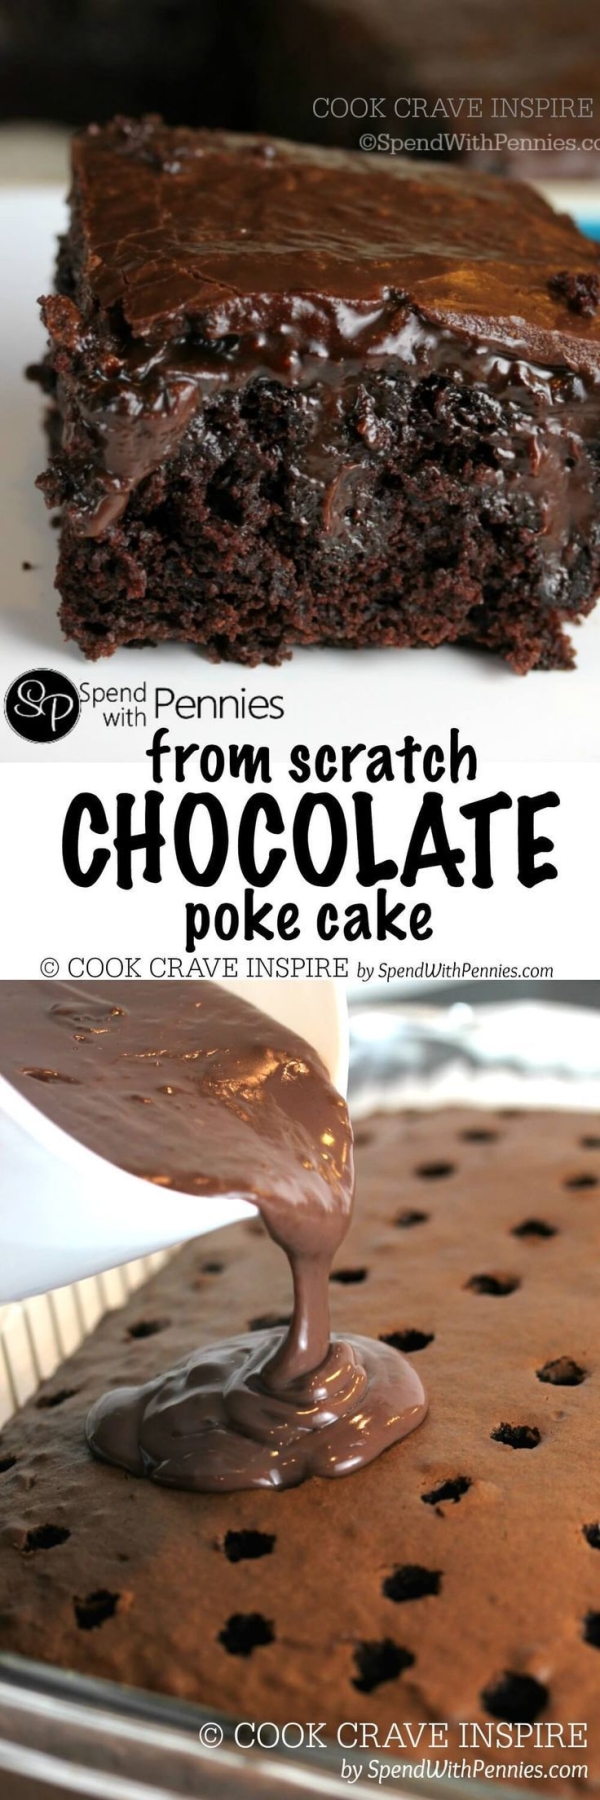 Chocolate Poke Cake From Scratch